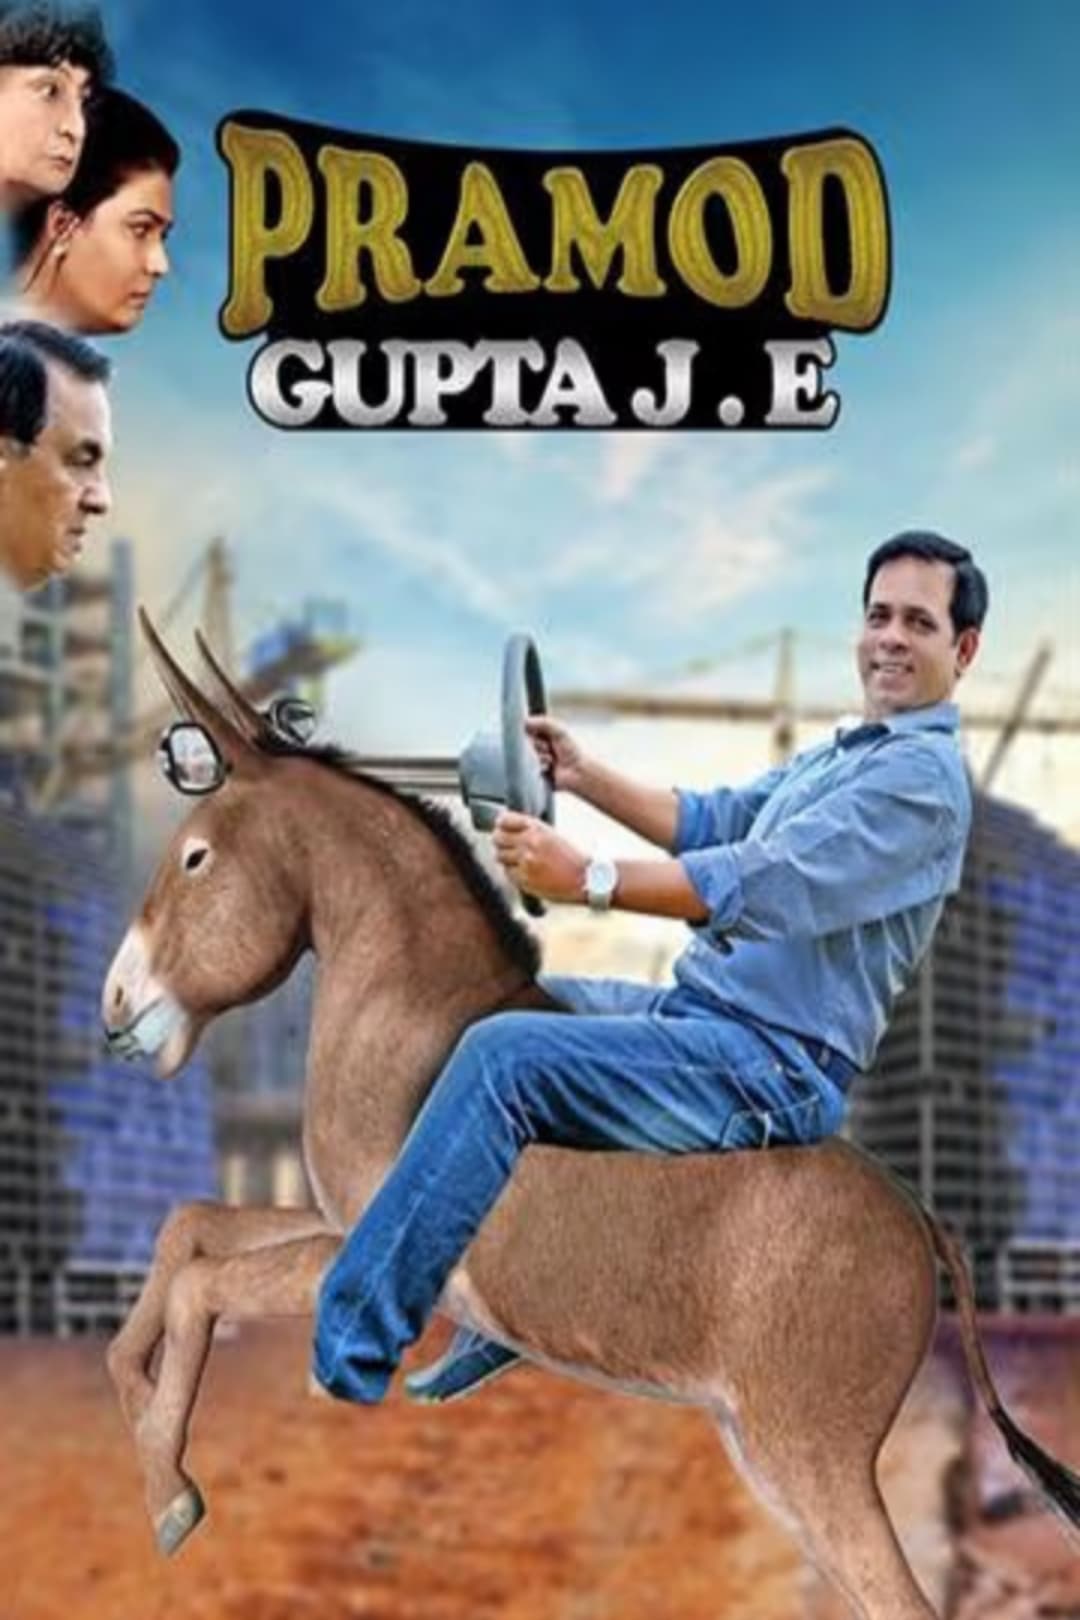 Pramod Gupta J E